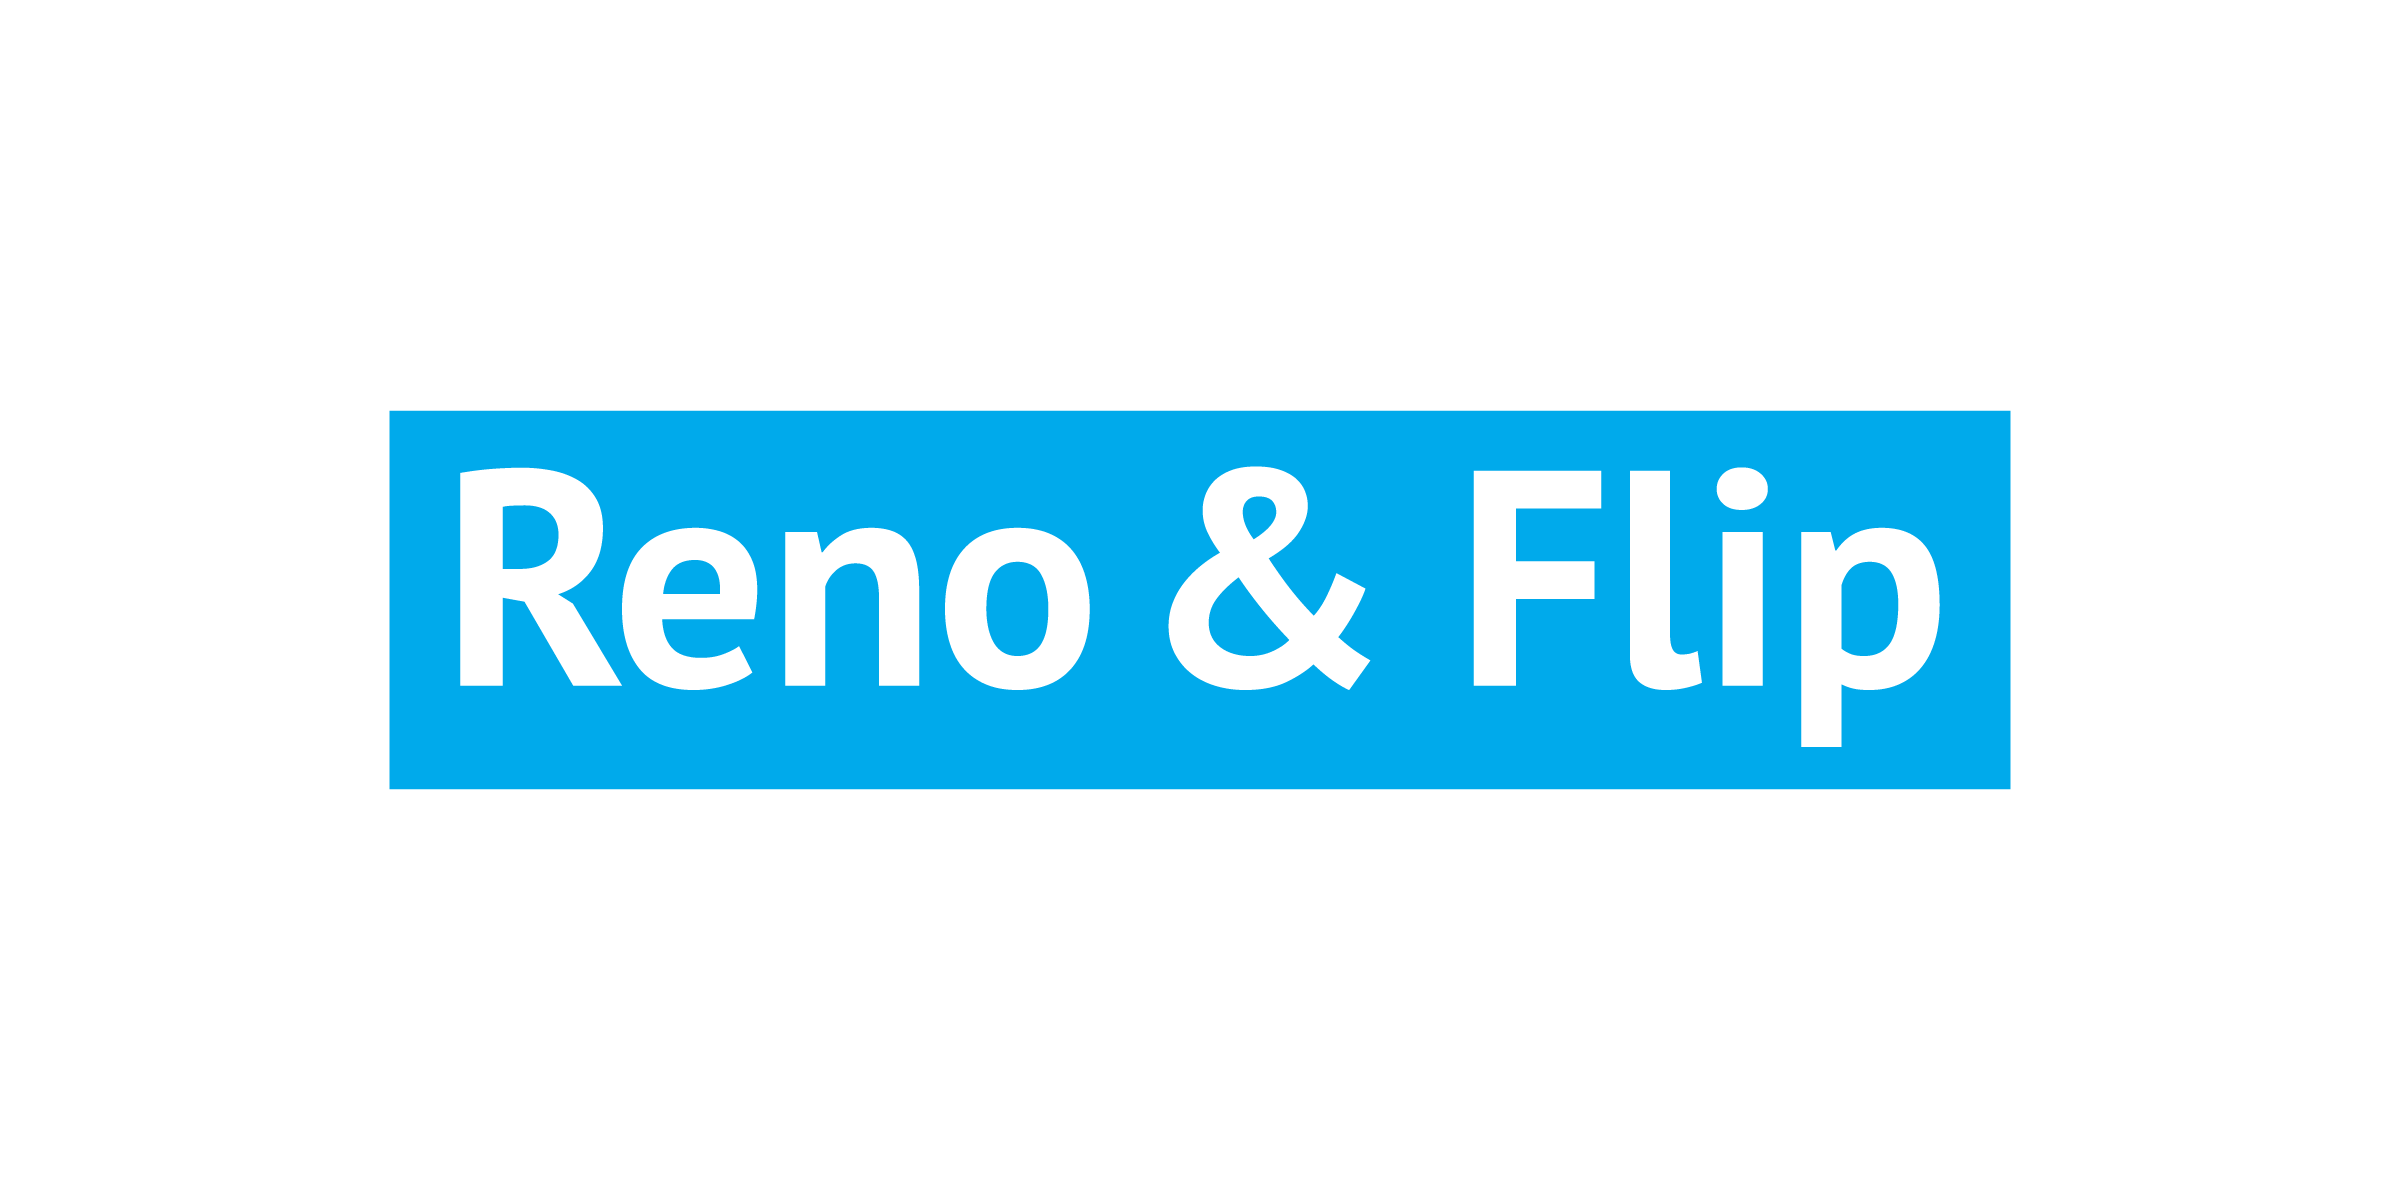 Reno & Flip